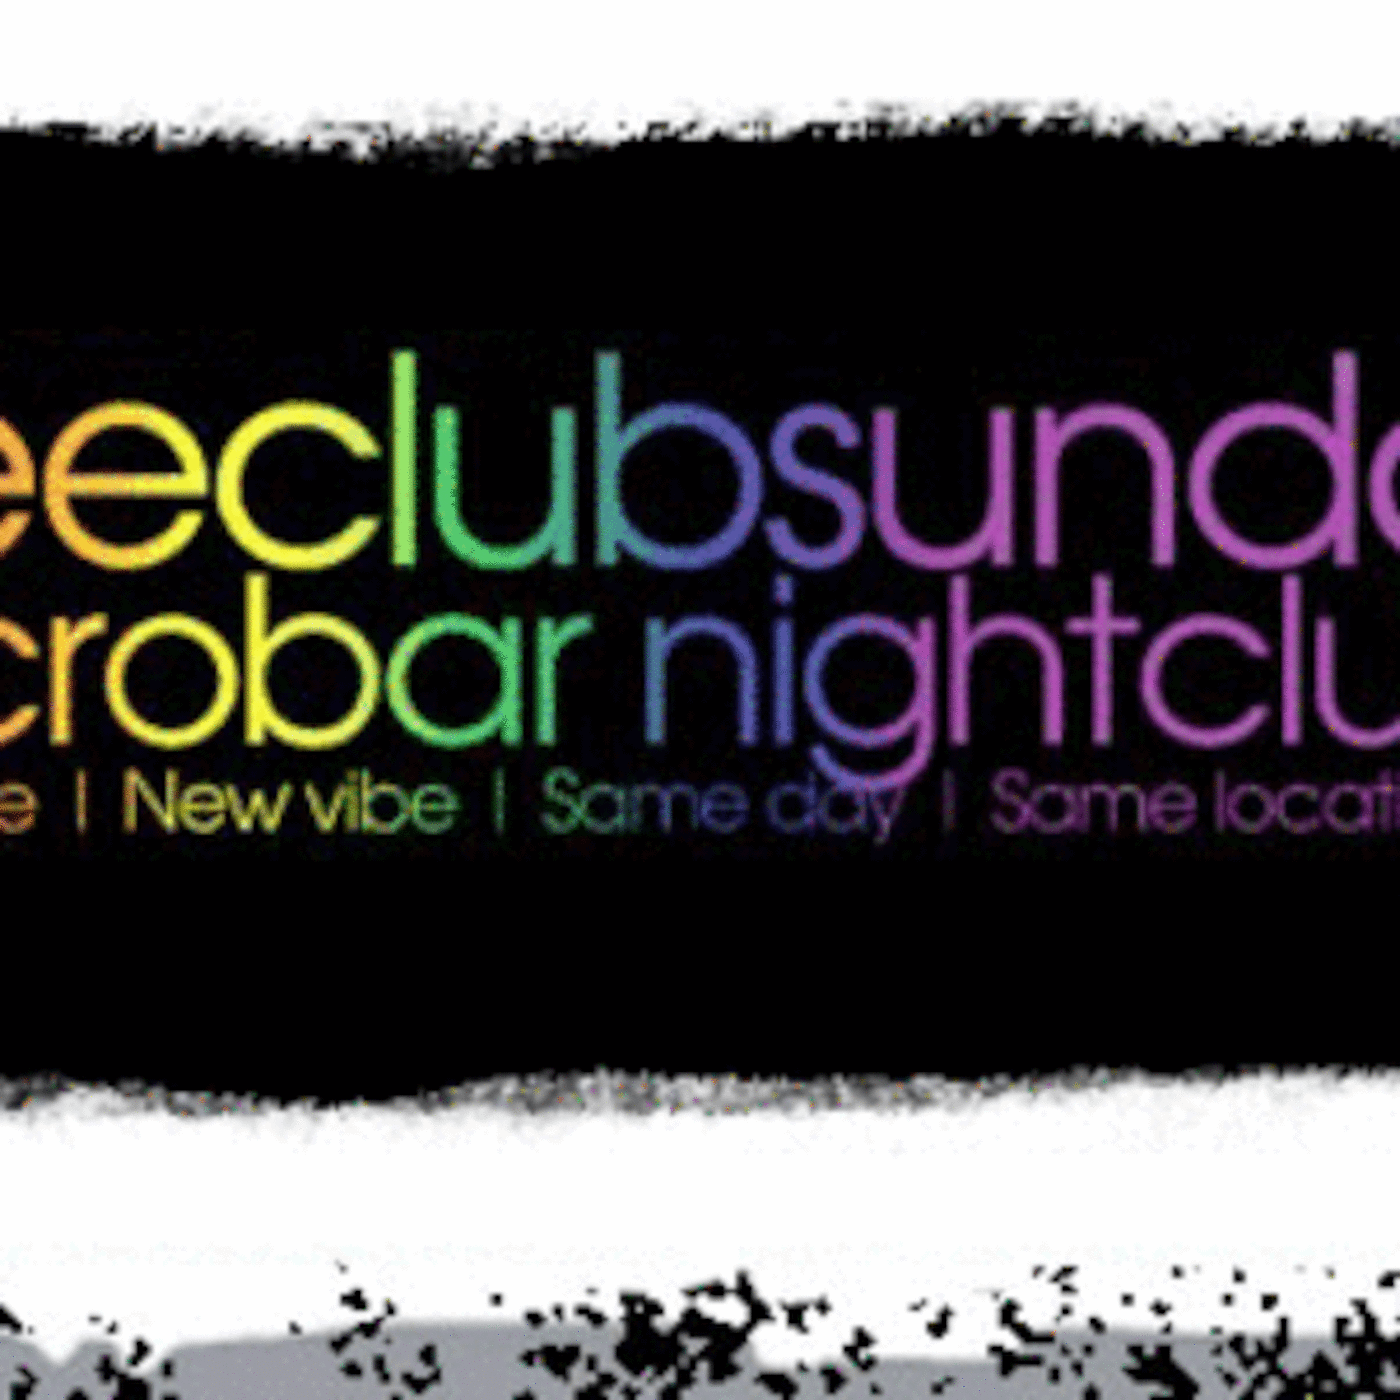 Glee Club/Crobar Sundays - 1995 (Episode 1)